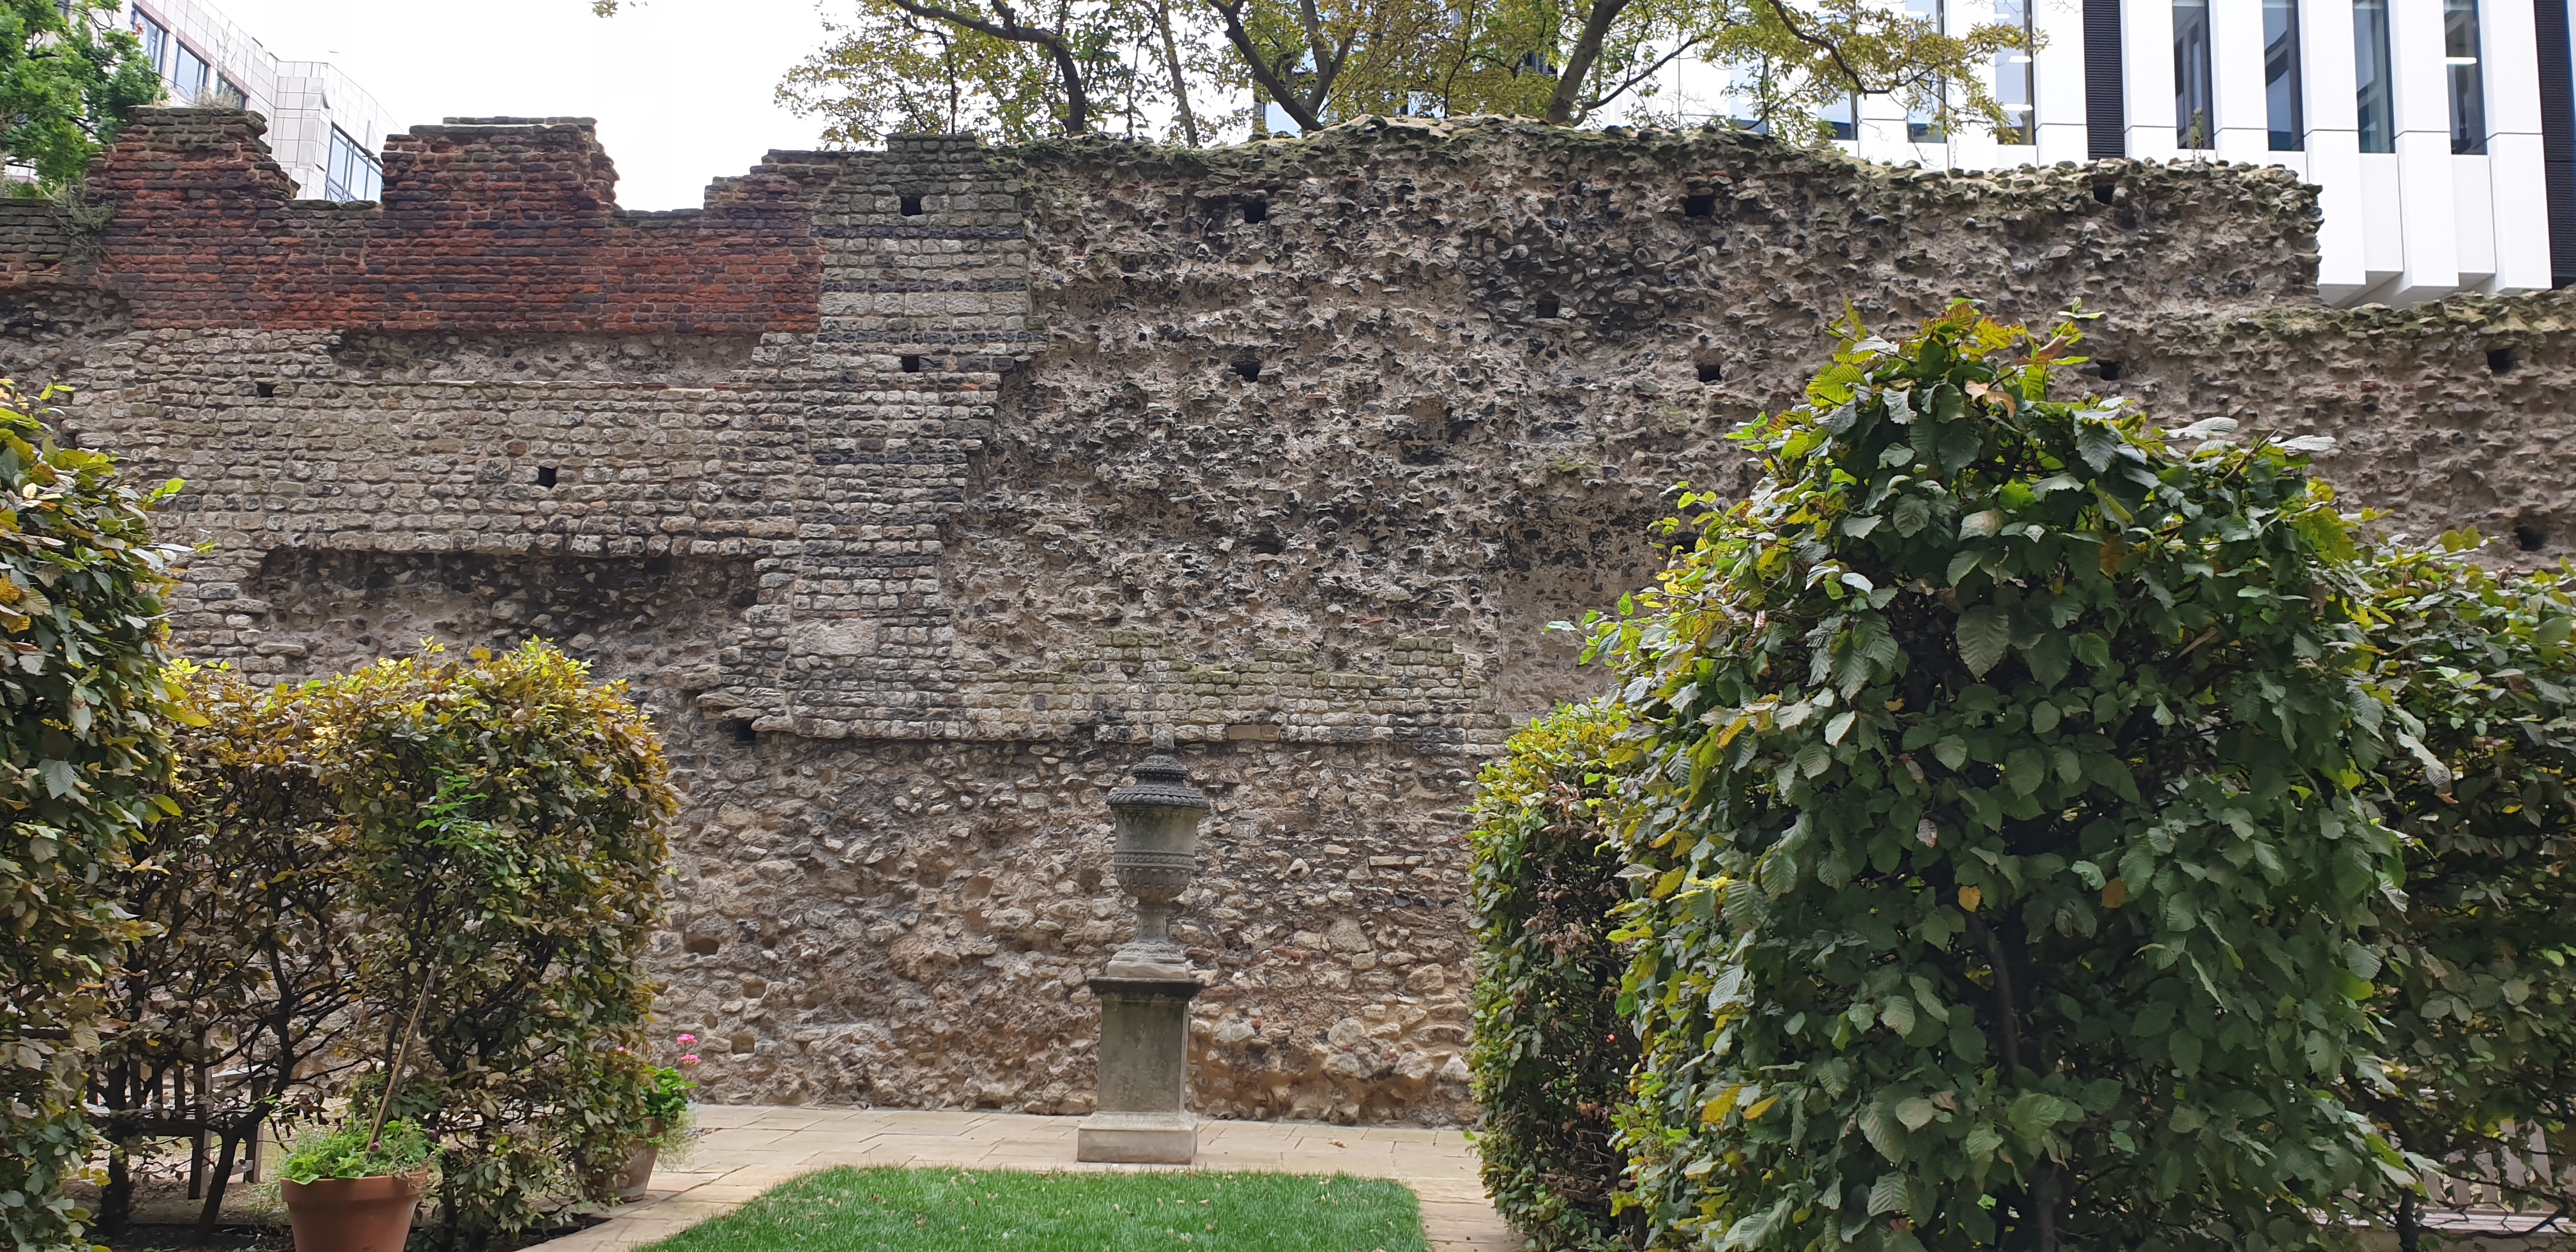 Roman Wall London. The Roman Wall at St Alphege Gardens. The via decumana in Roman London.